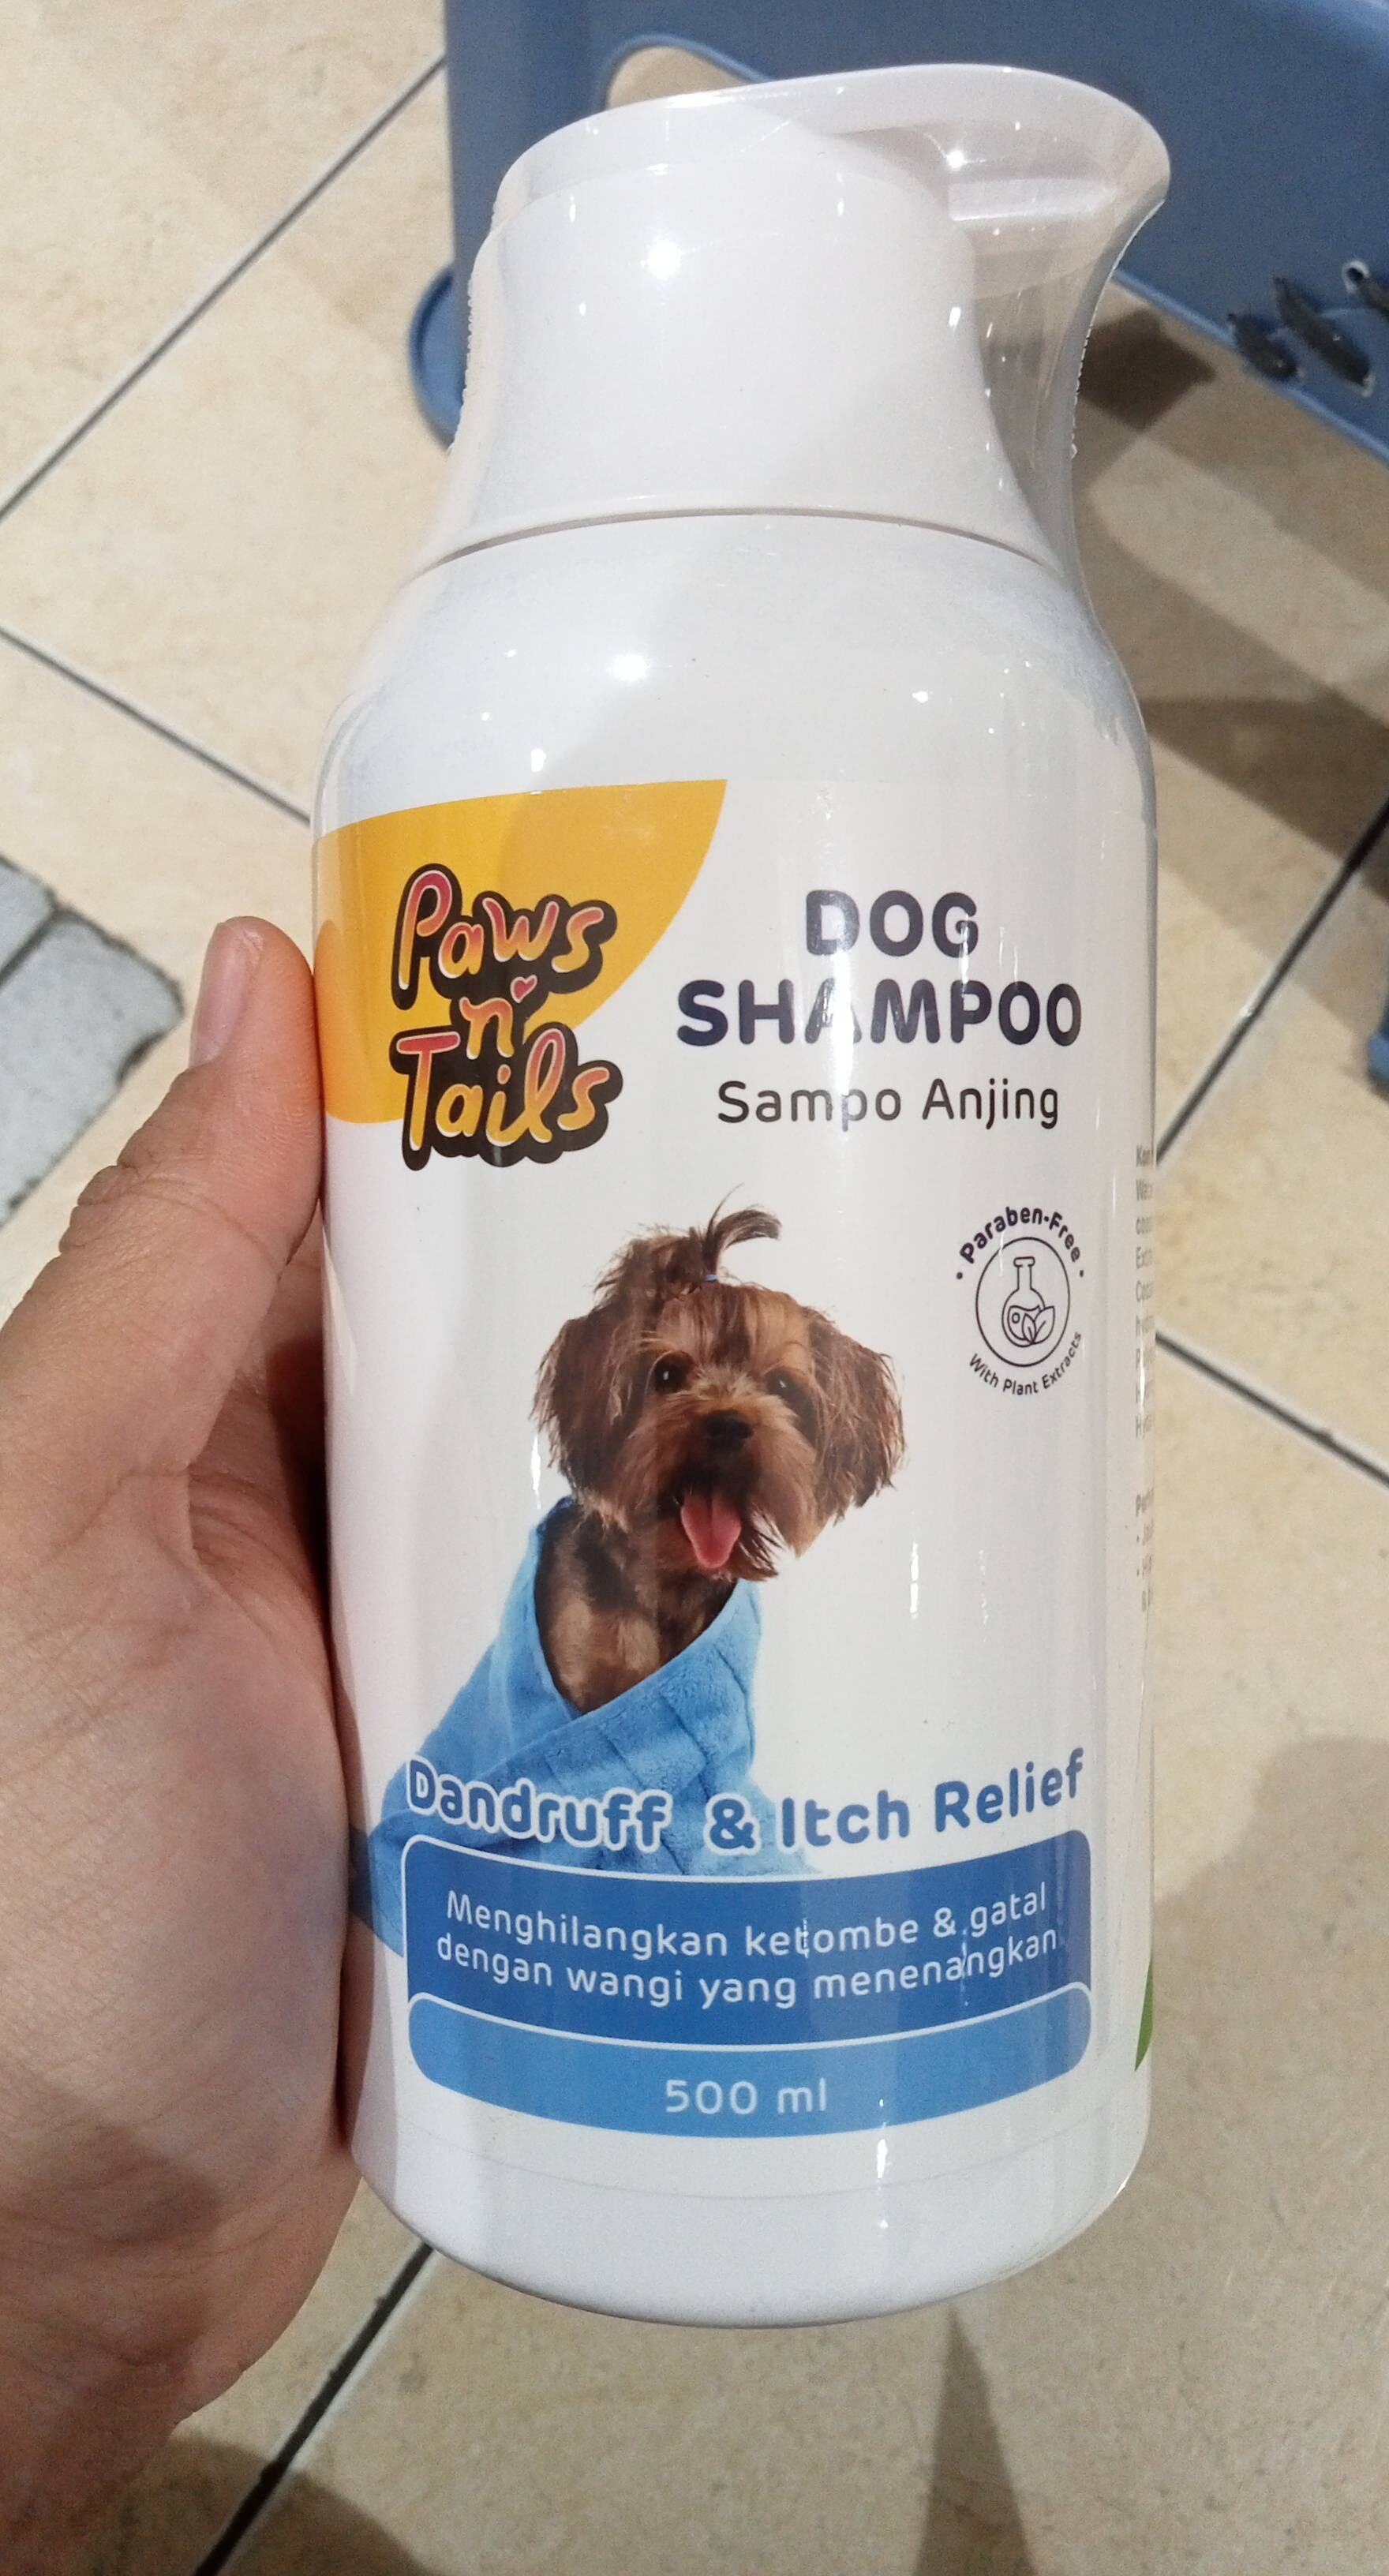 Dog shampoo anti dandruff n itch relief - Produkt - en